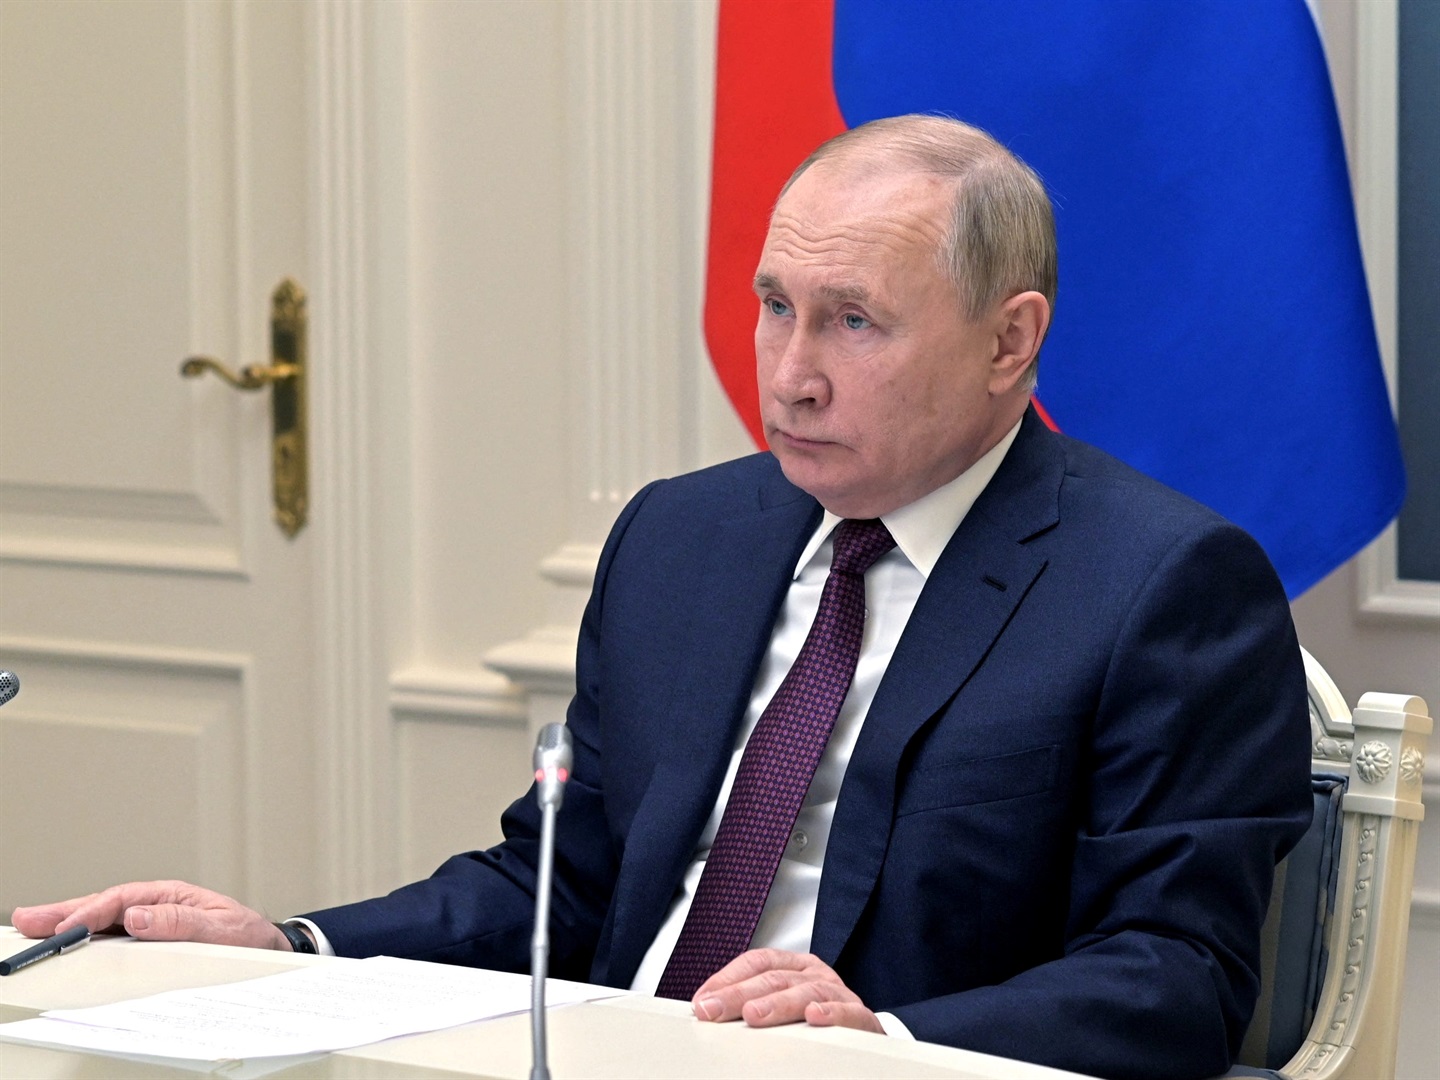 Russian President Vladimir Putin seen in Moscow, Russia, on February 19, 2022. Sputnik/Aleksey Nikolskyi/Kremlin via REUTERS